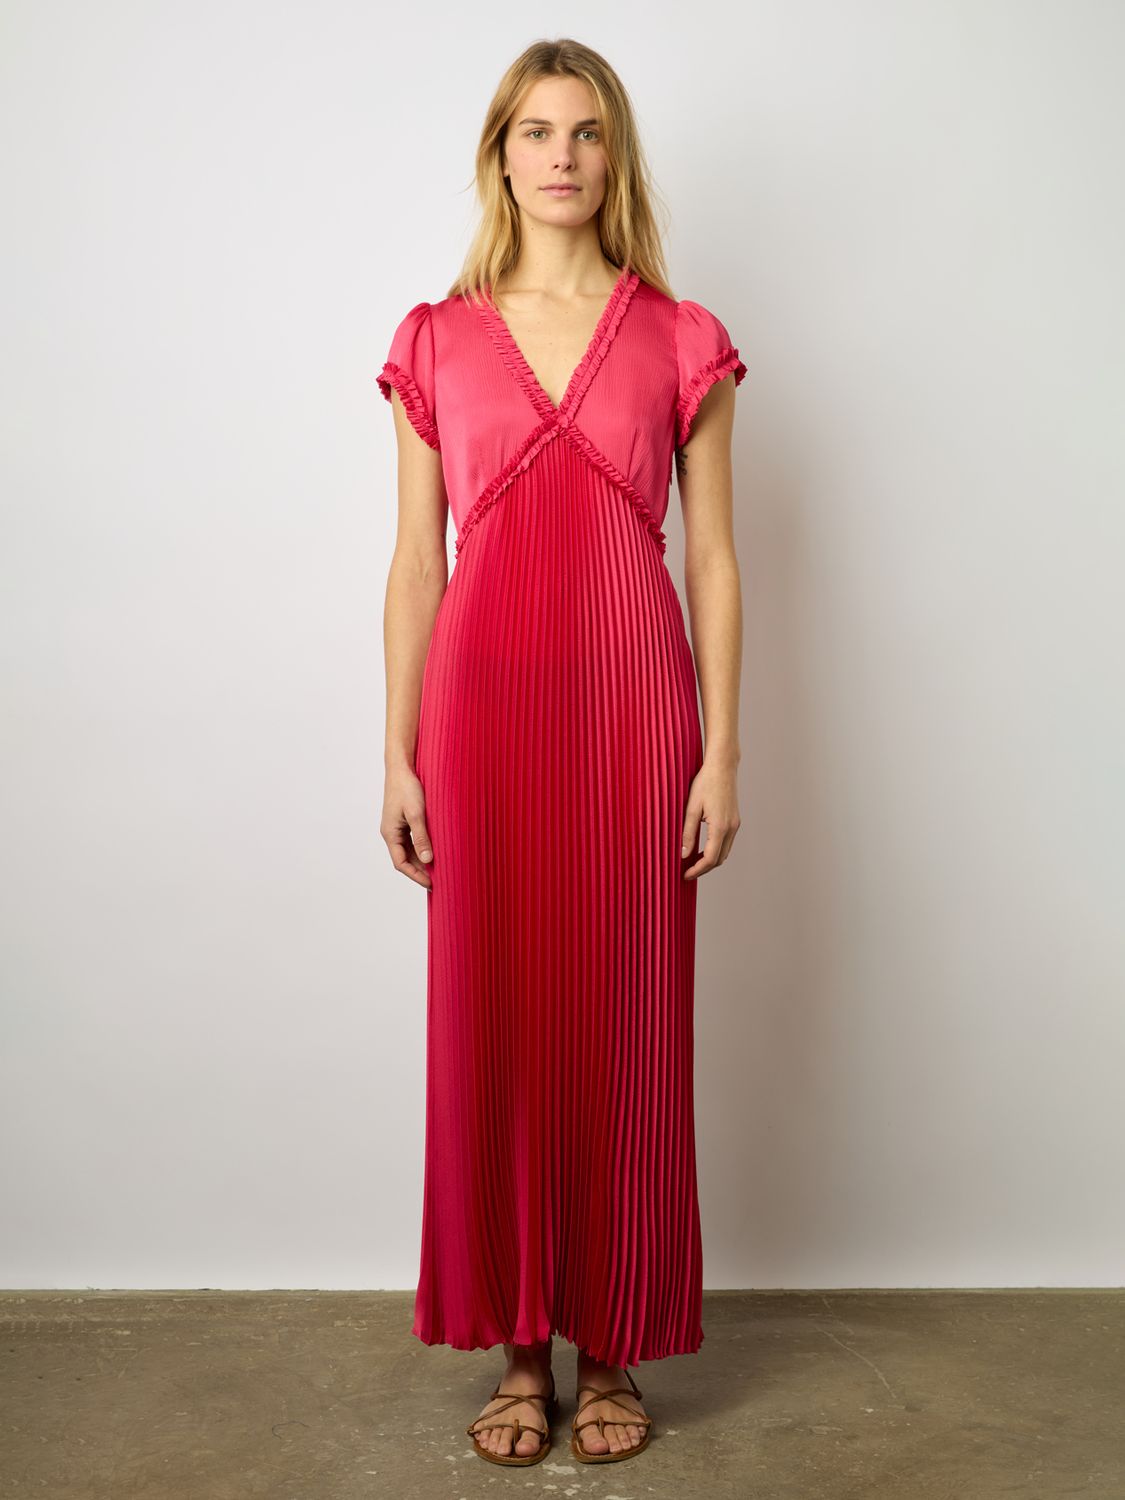 Gerard Darel Elvy Plisse Empire Line Maxi Dress, Pink, 16